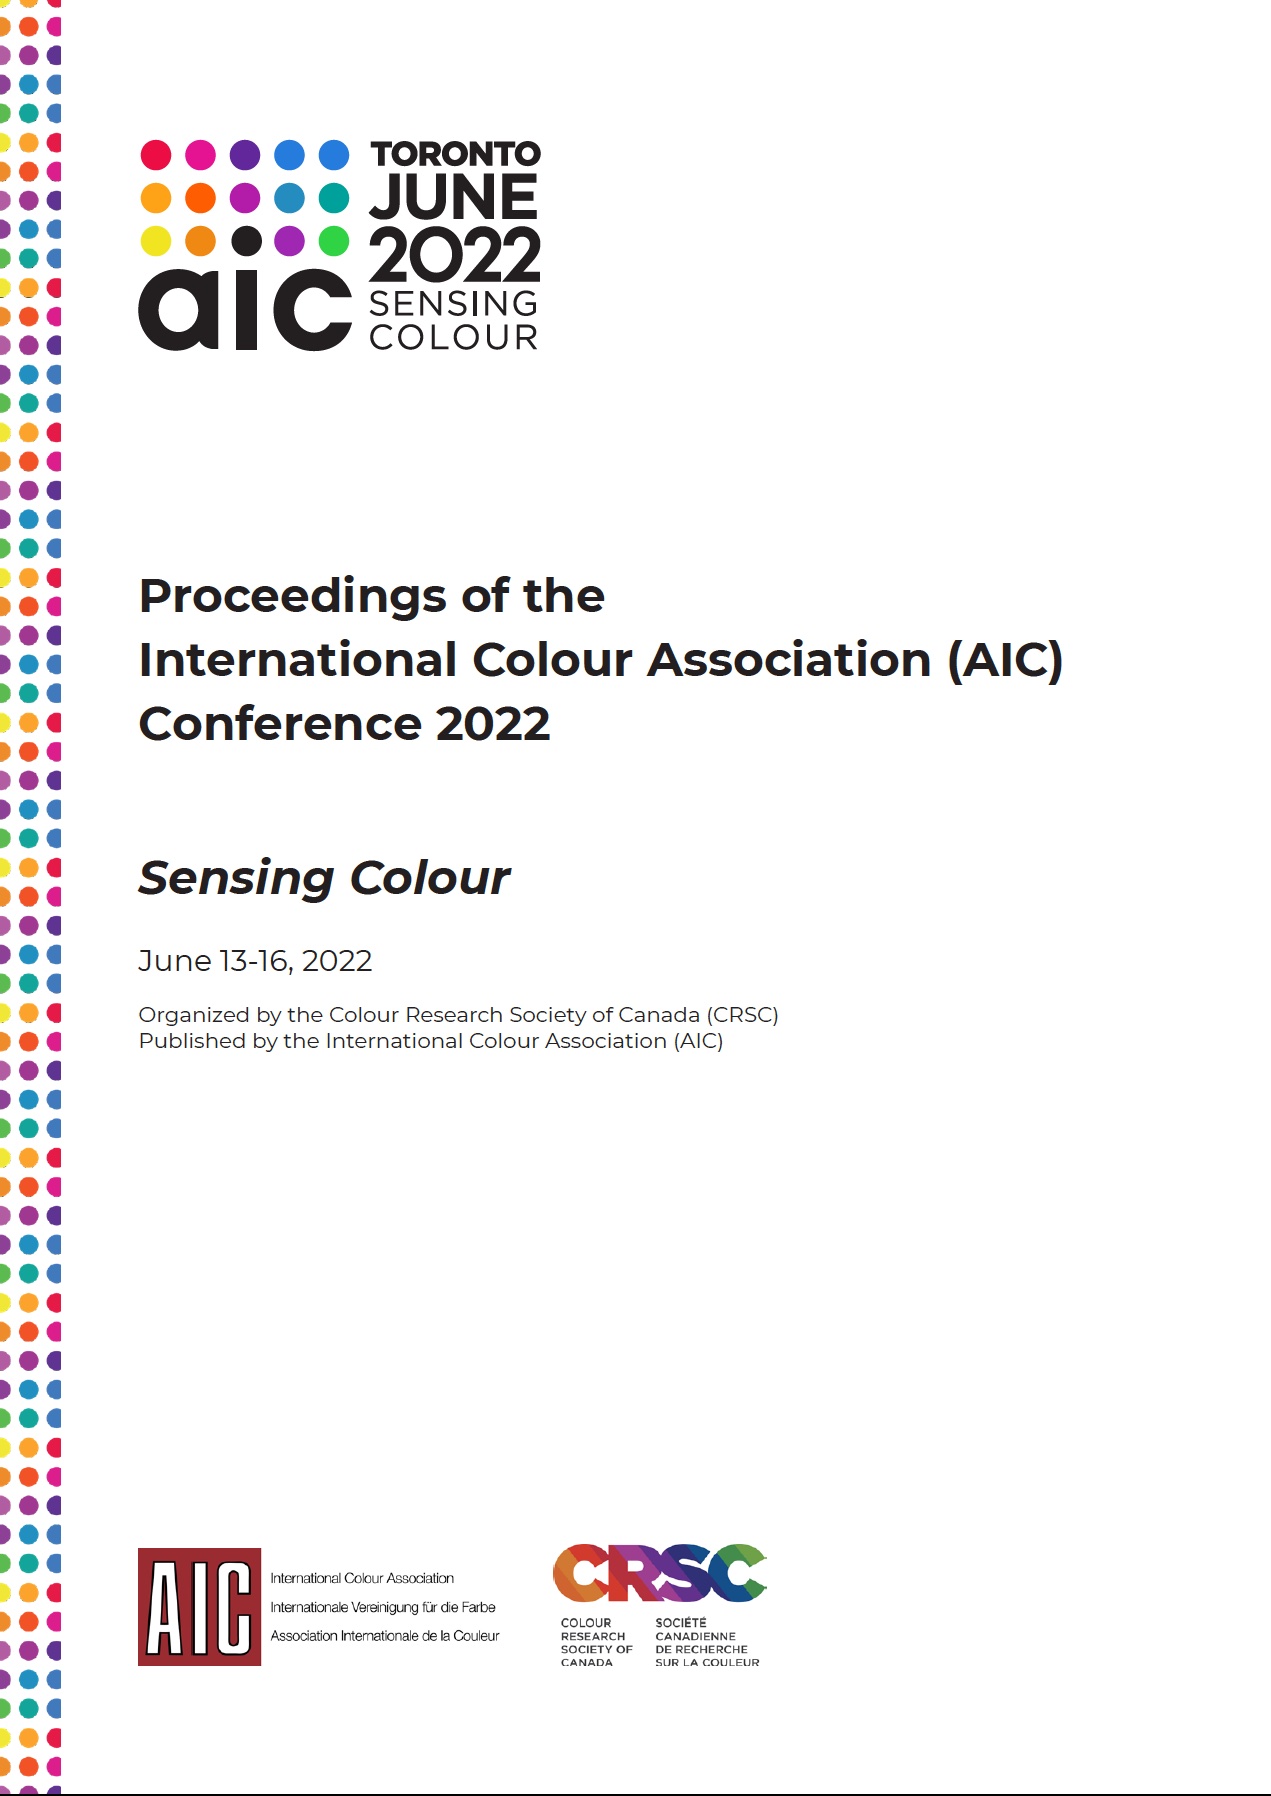 AIC 2022 Proceedings